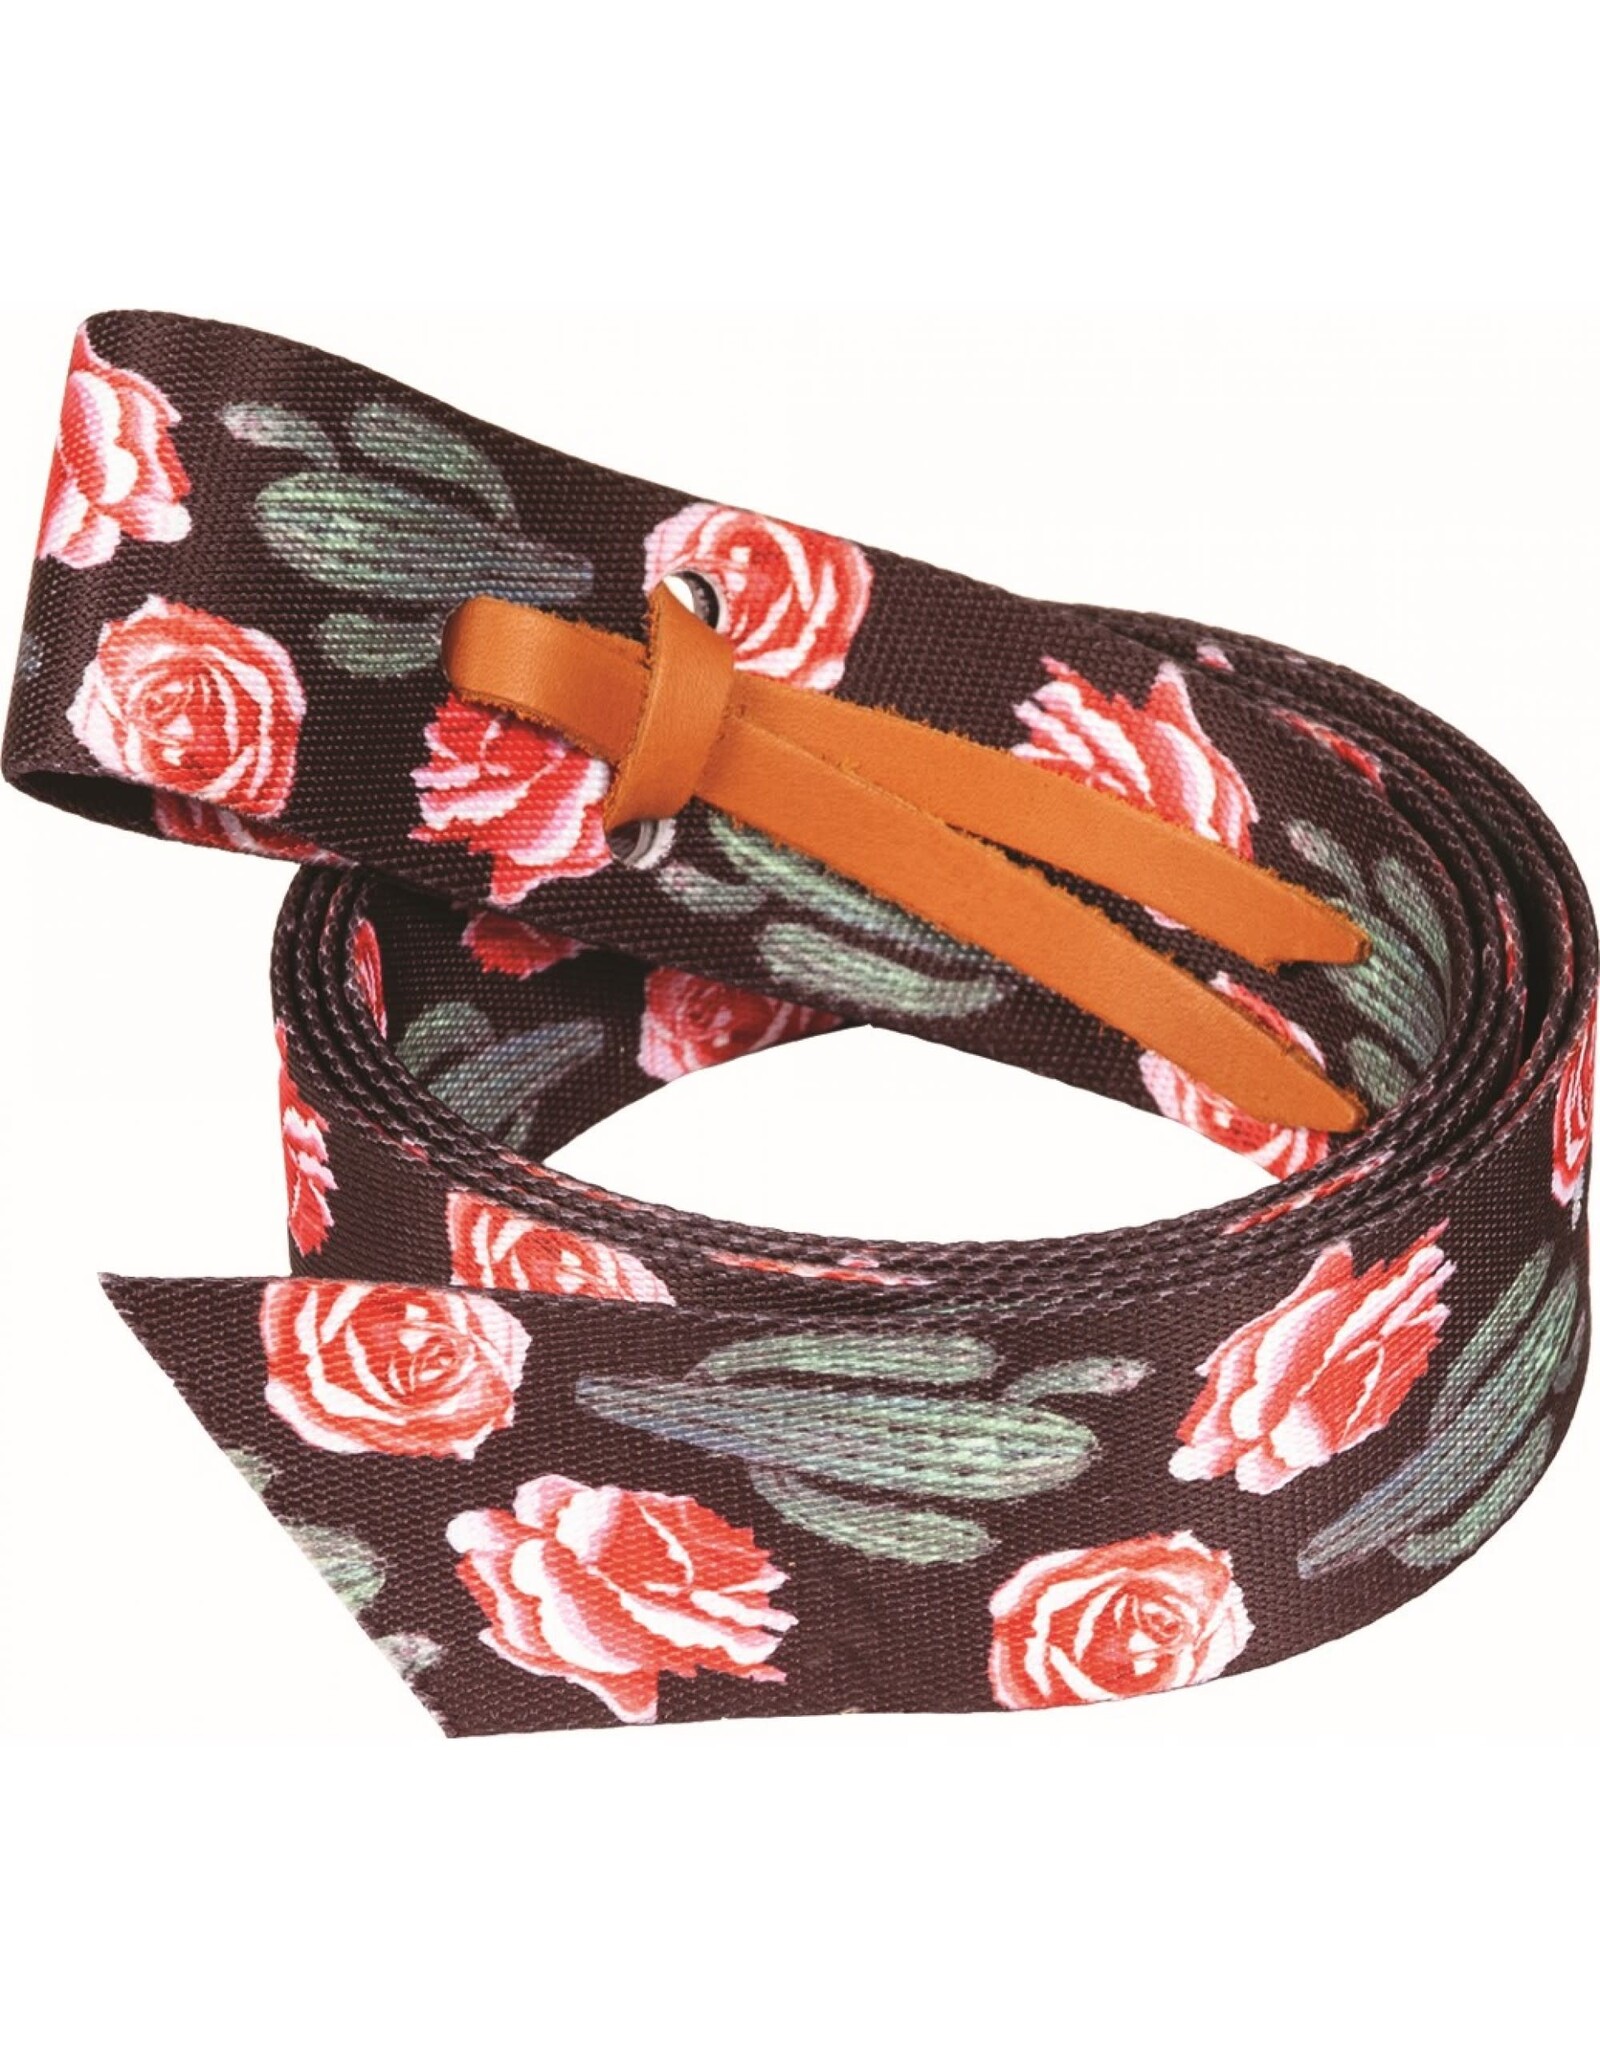 Western Rawhide Nylon Tie Straps- Cactus Rose- 9038-4- 300004-27